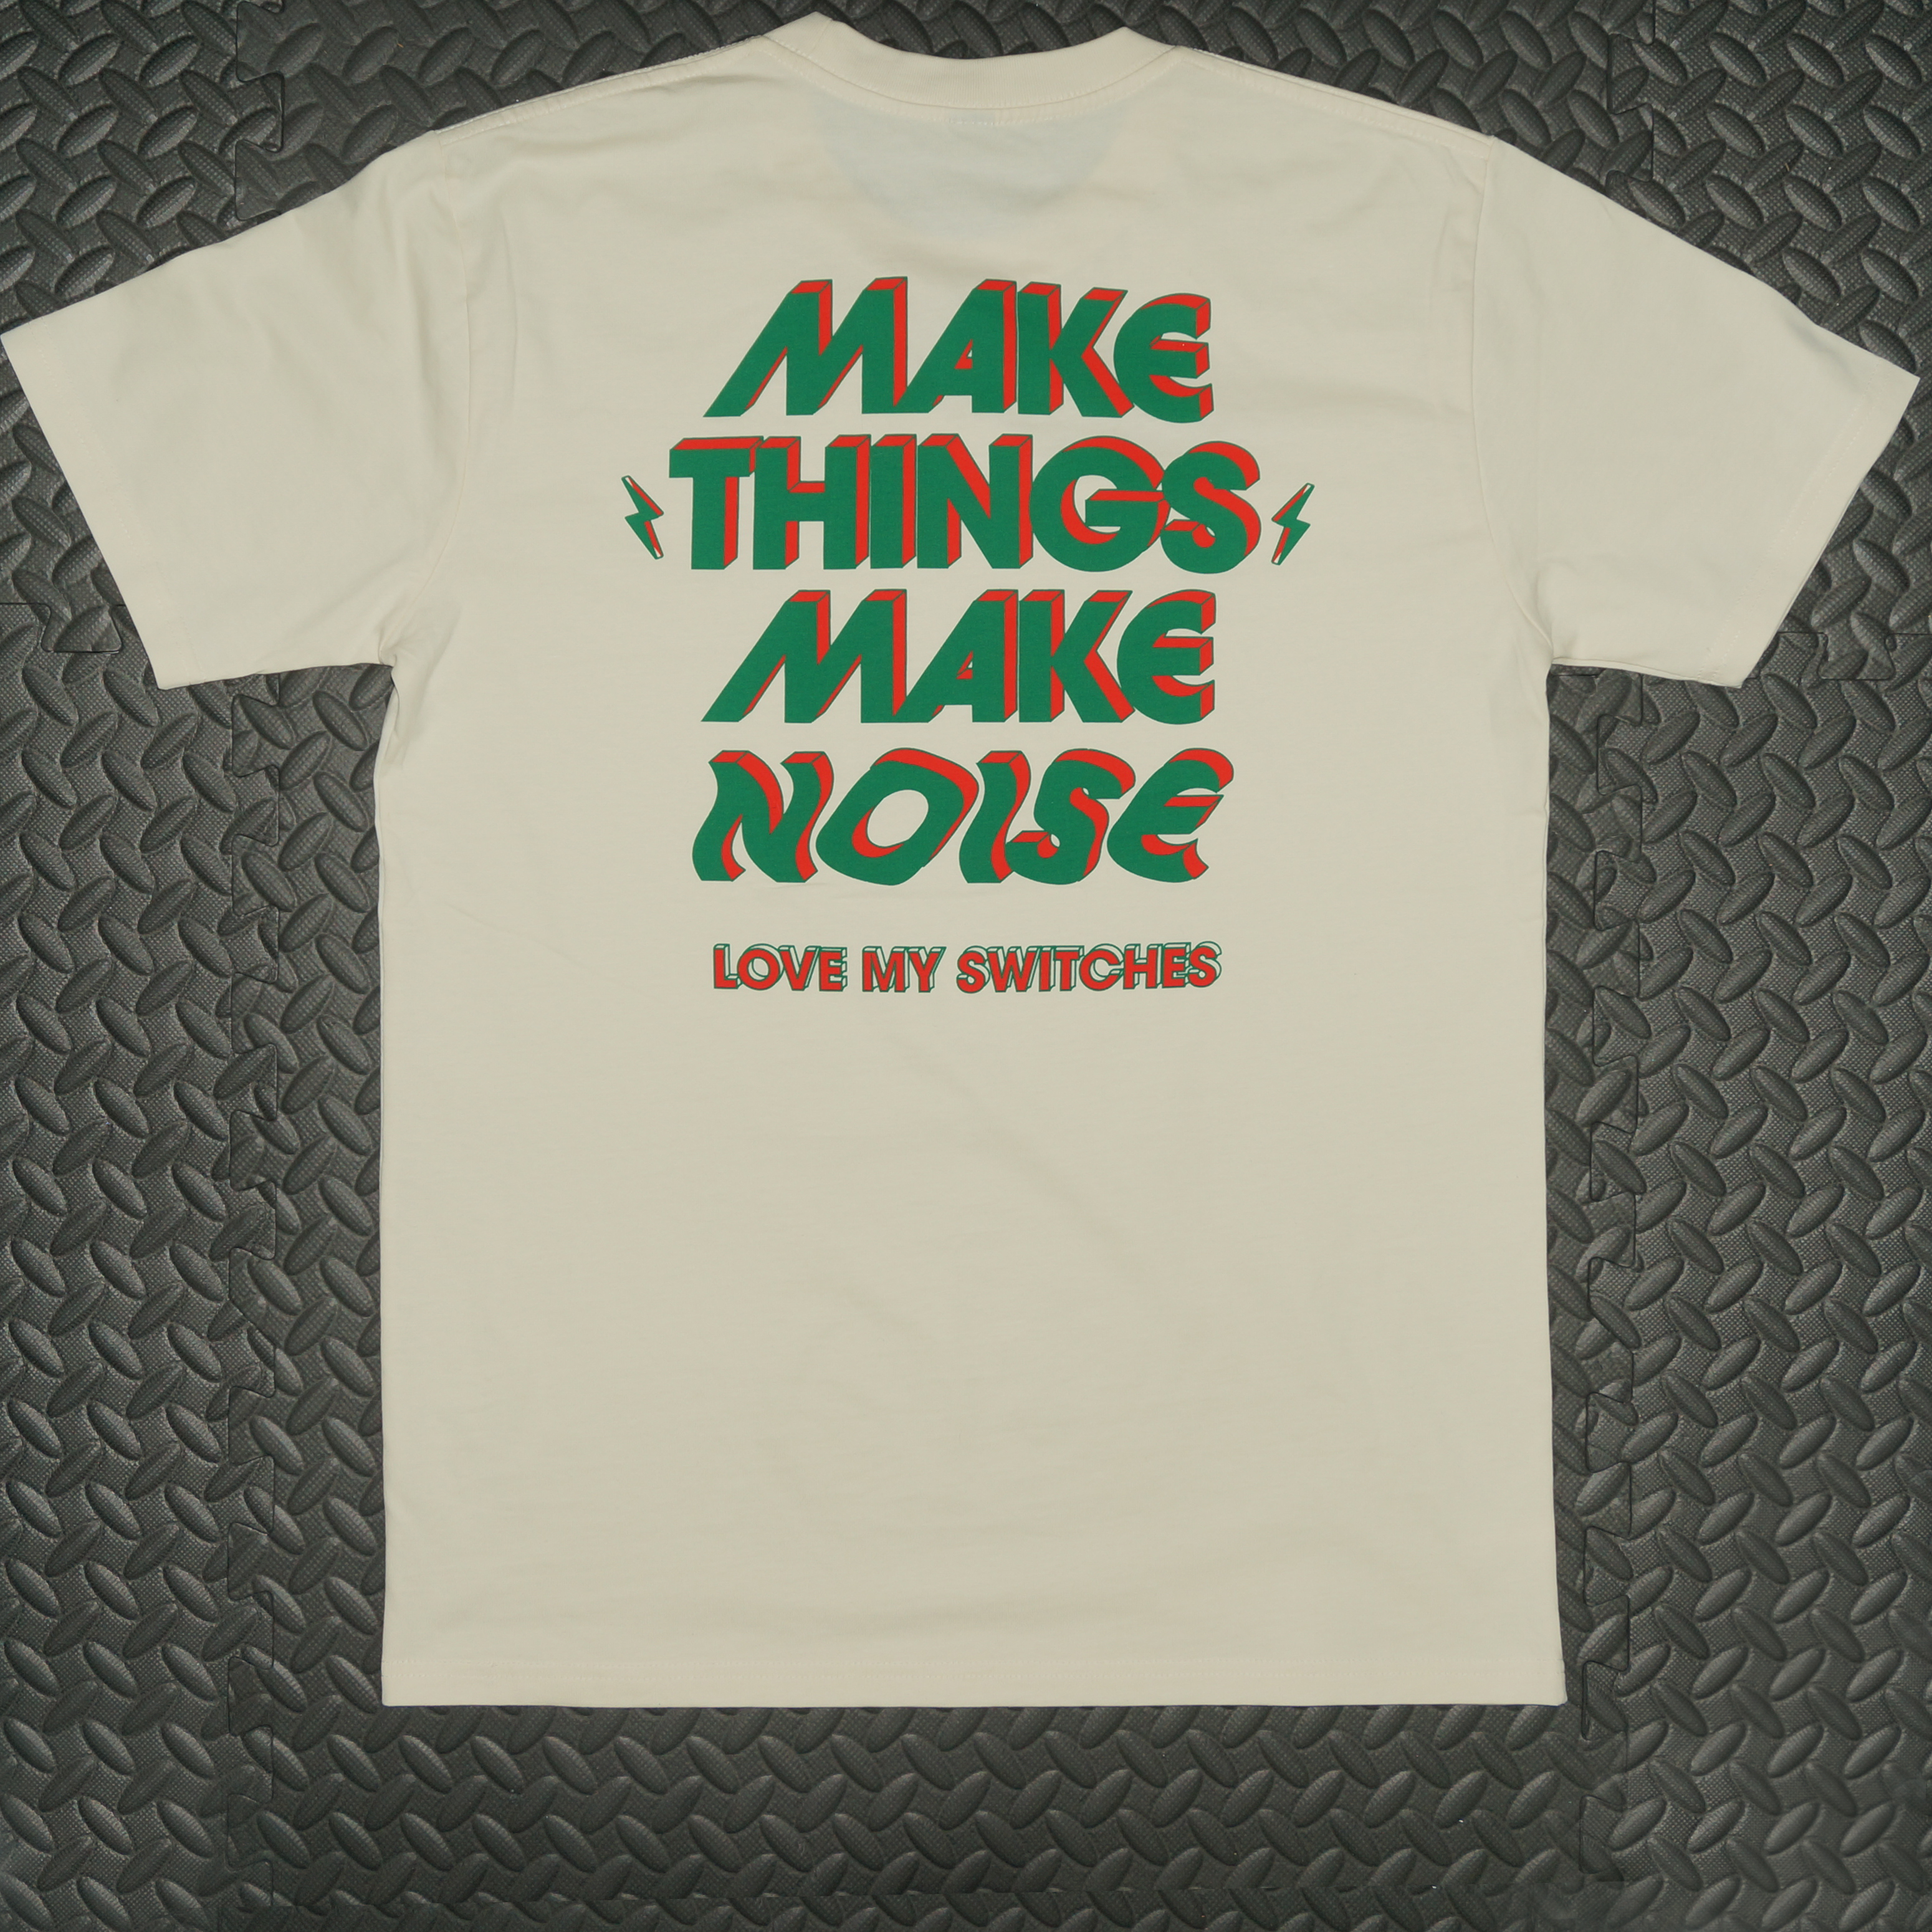 The Make Things Make Noise T-Shirt